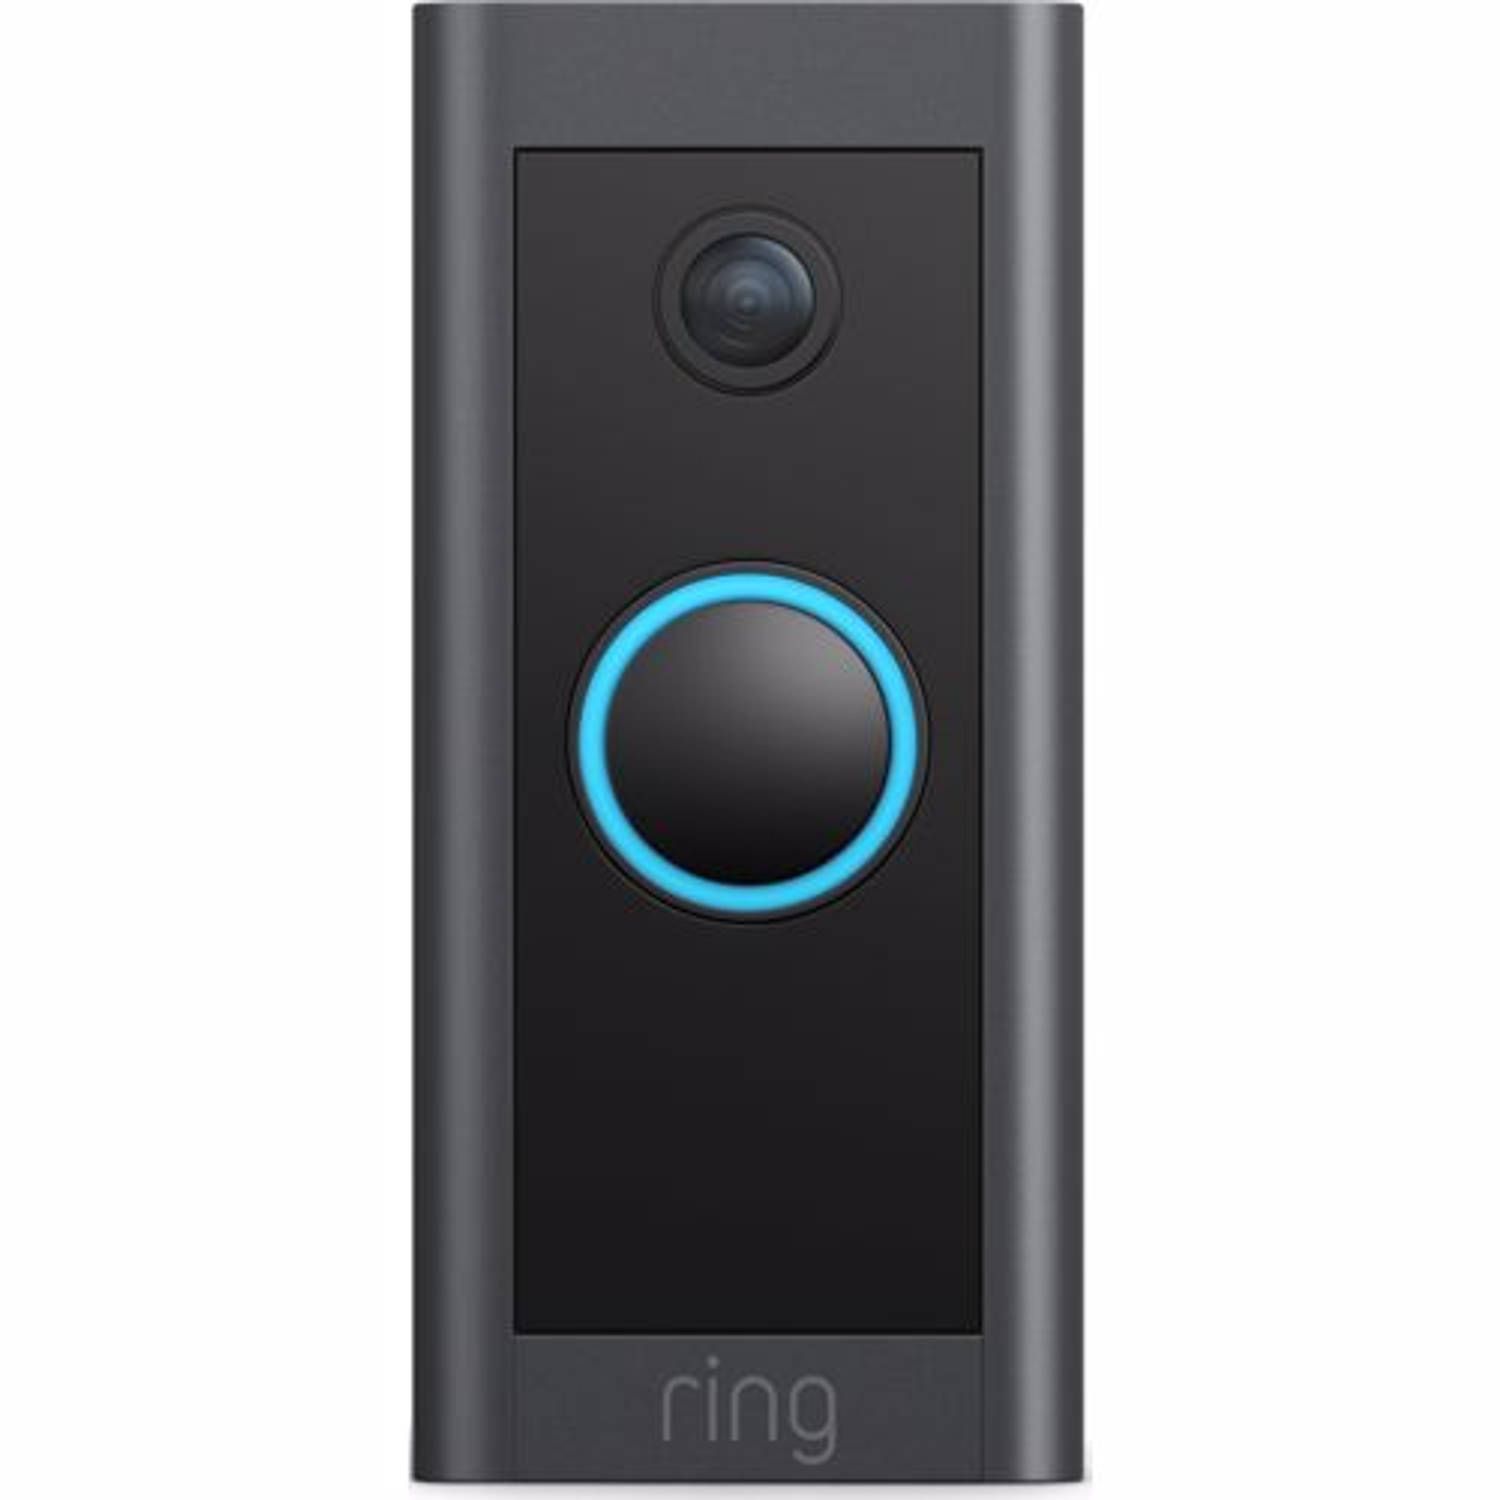  Ring Video Doorbell Wired / 8VRAGZ-0EU0-2